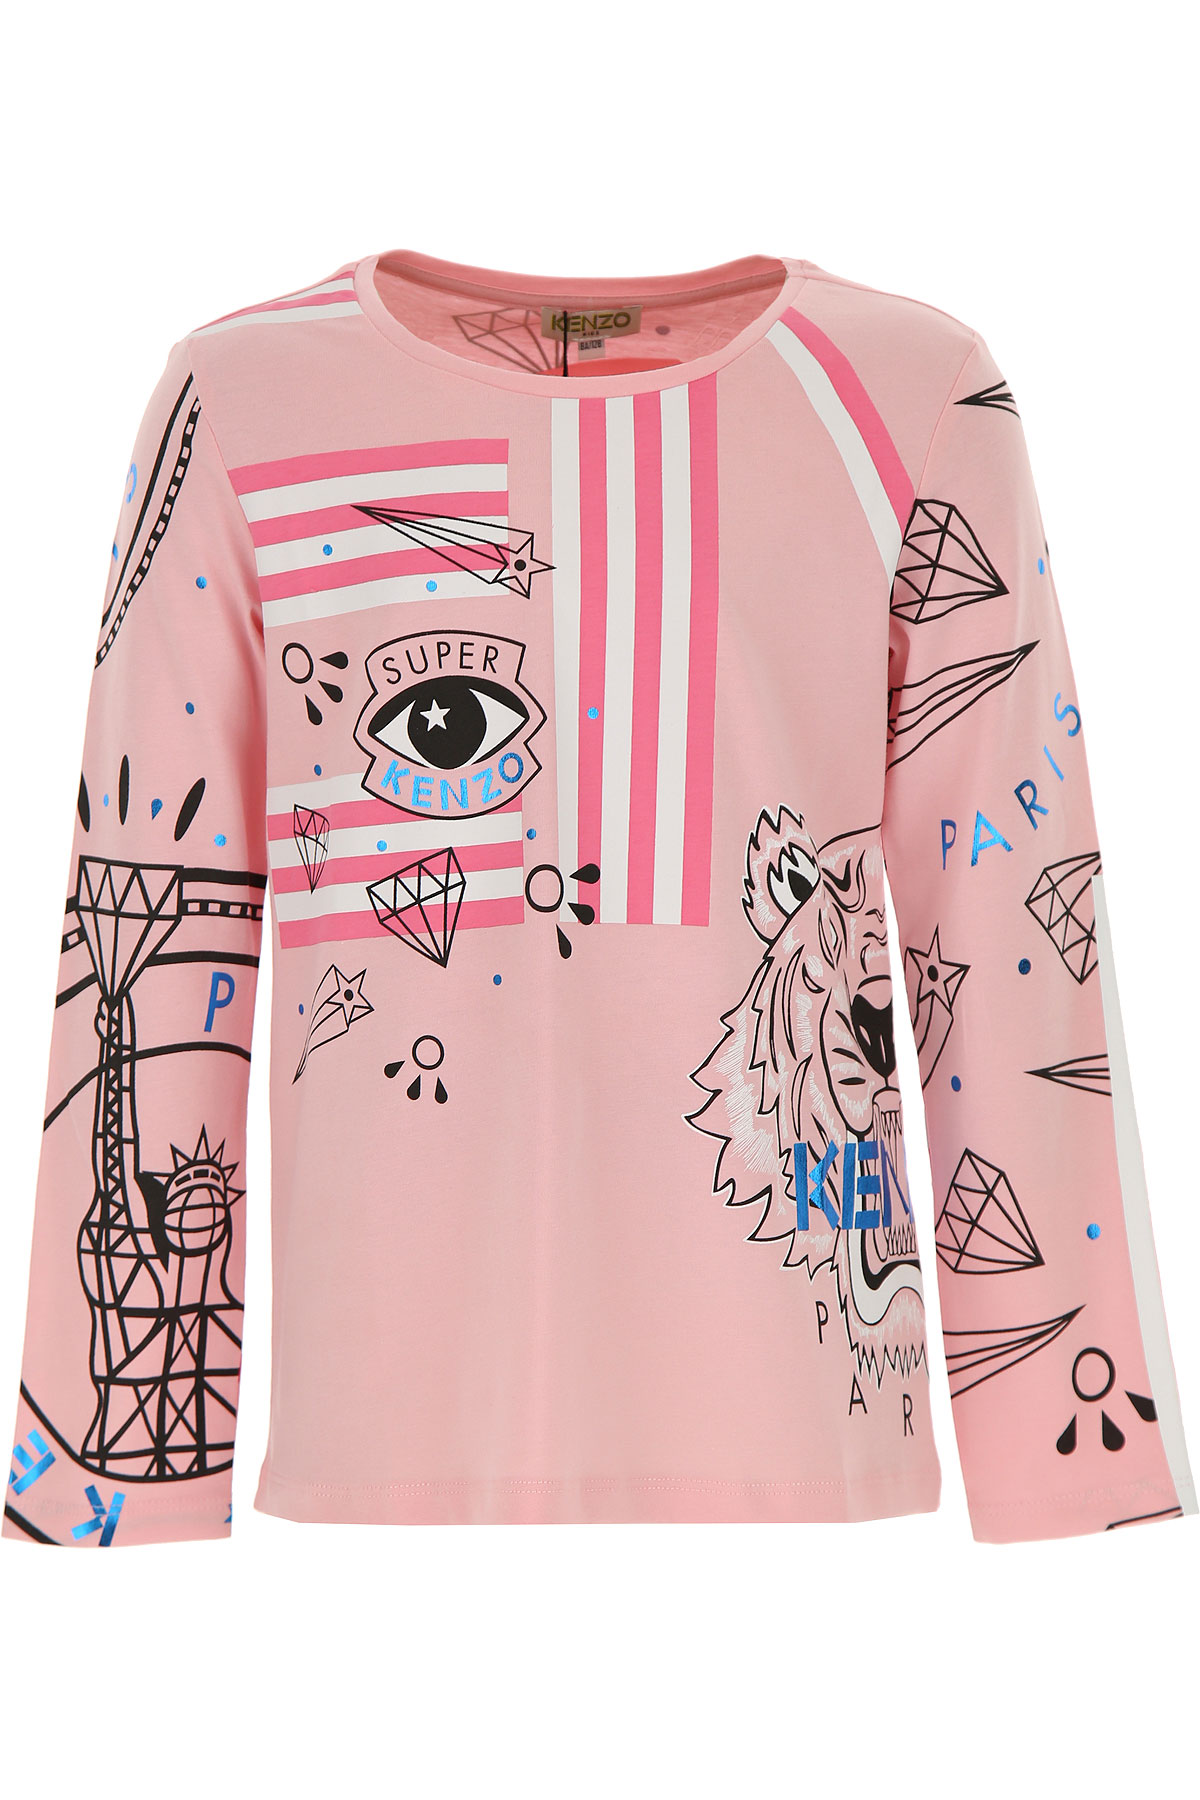 Kenzo Kinder T-Shirt für Mädchen Günstig im Sale, Pink, Baumwolle, 2017, 10Y 12Y 4Y 6Y 8Y